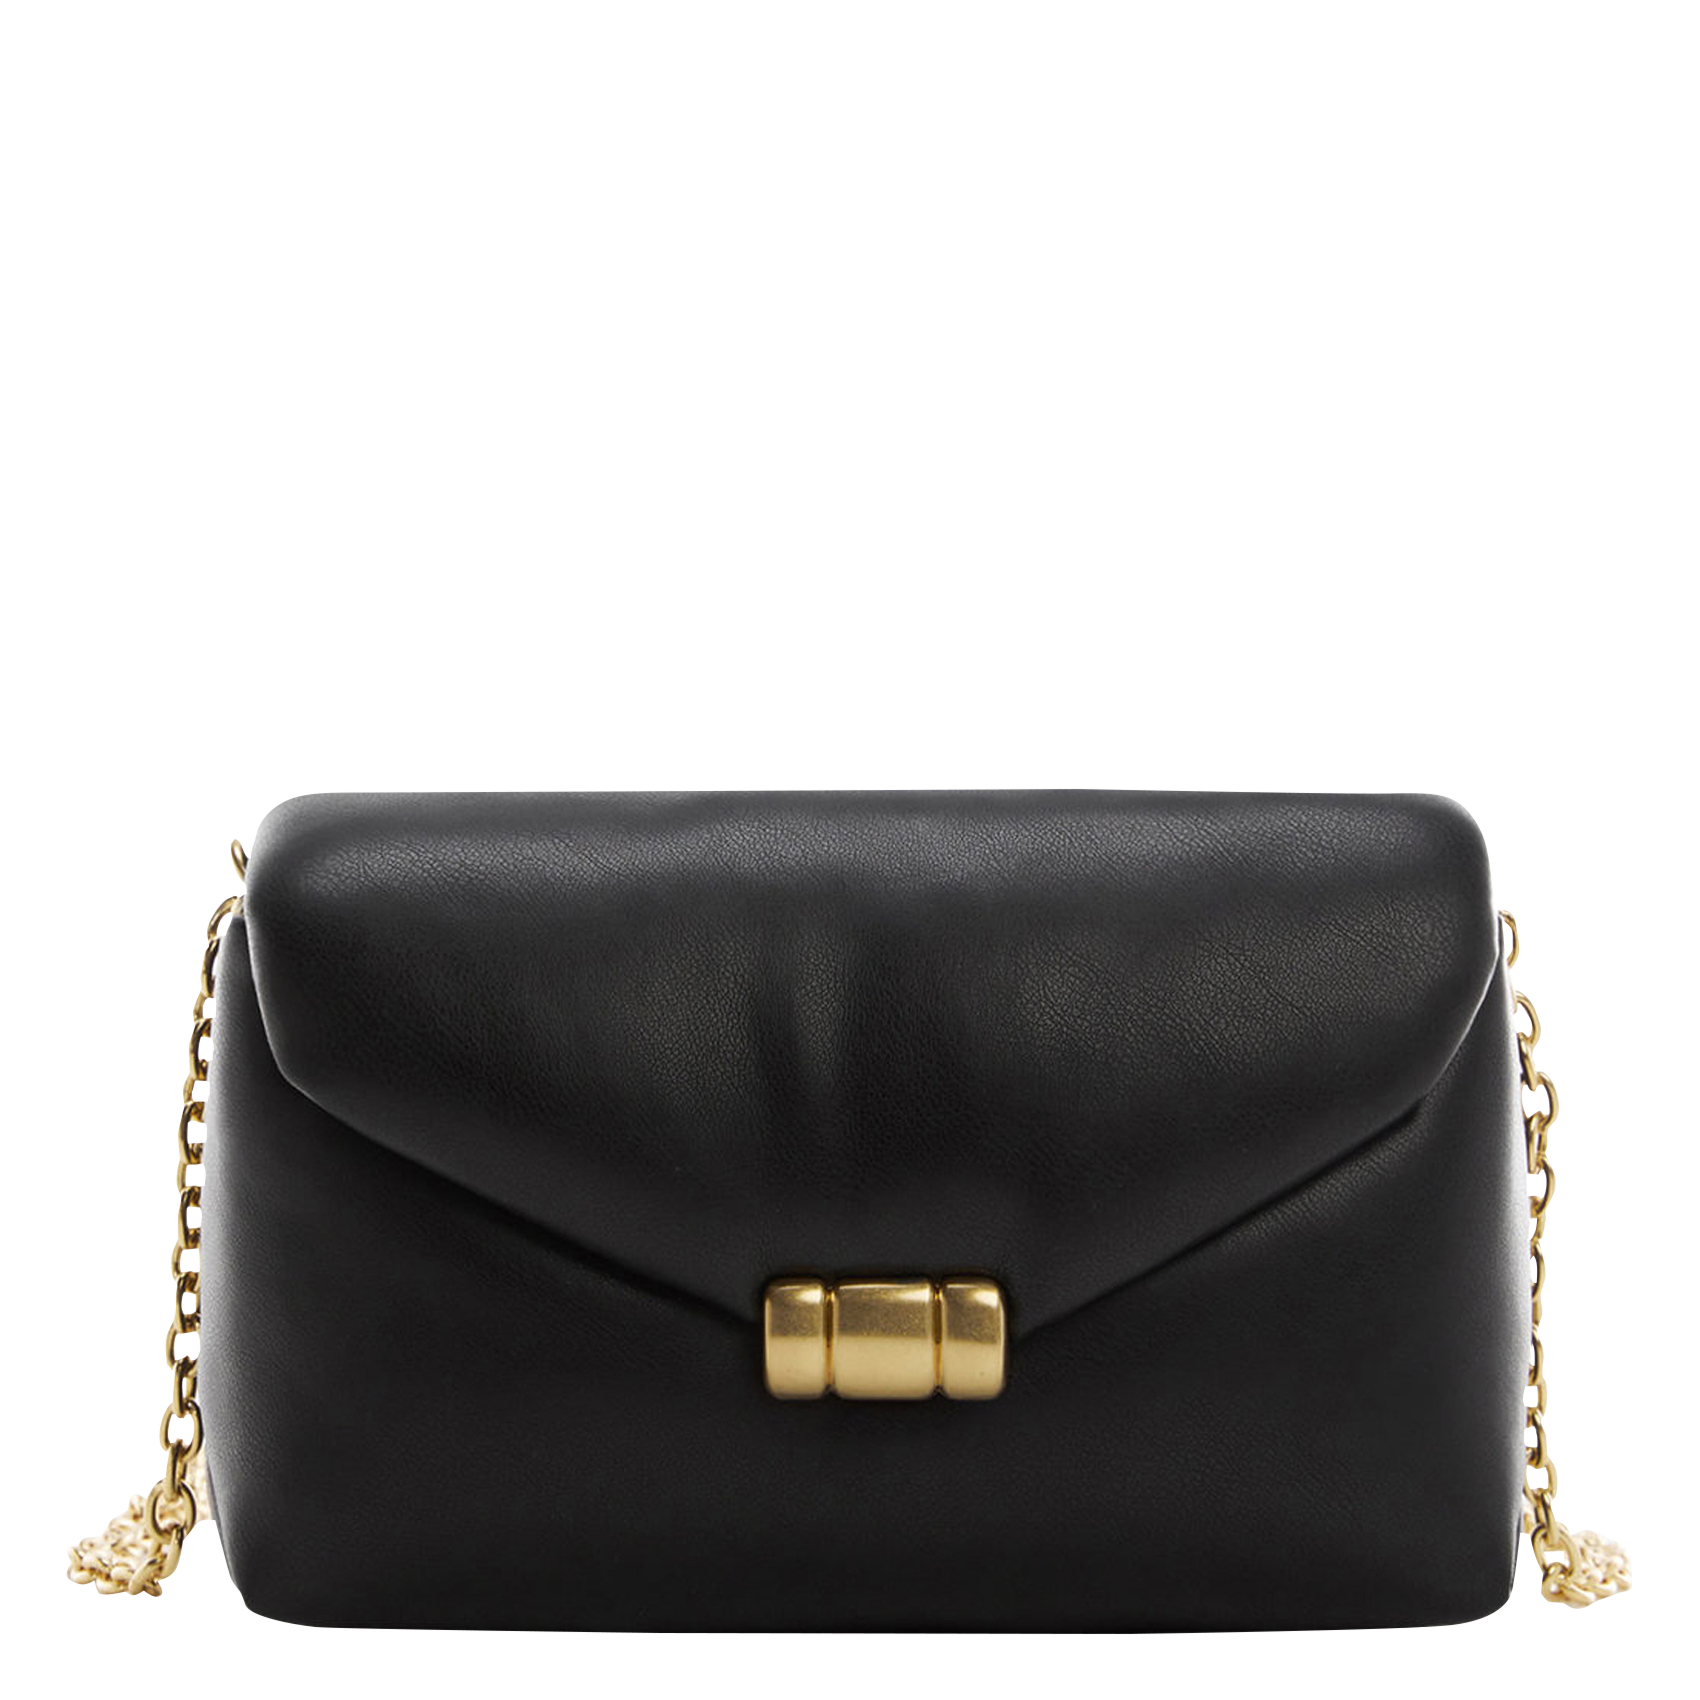 Black Small Leather Handbag - Mango Accessories | eBay